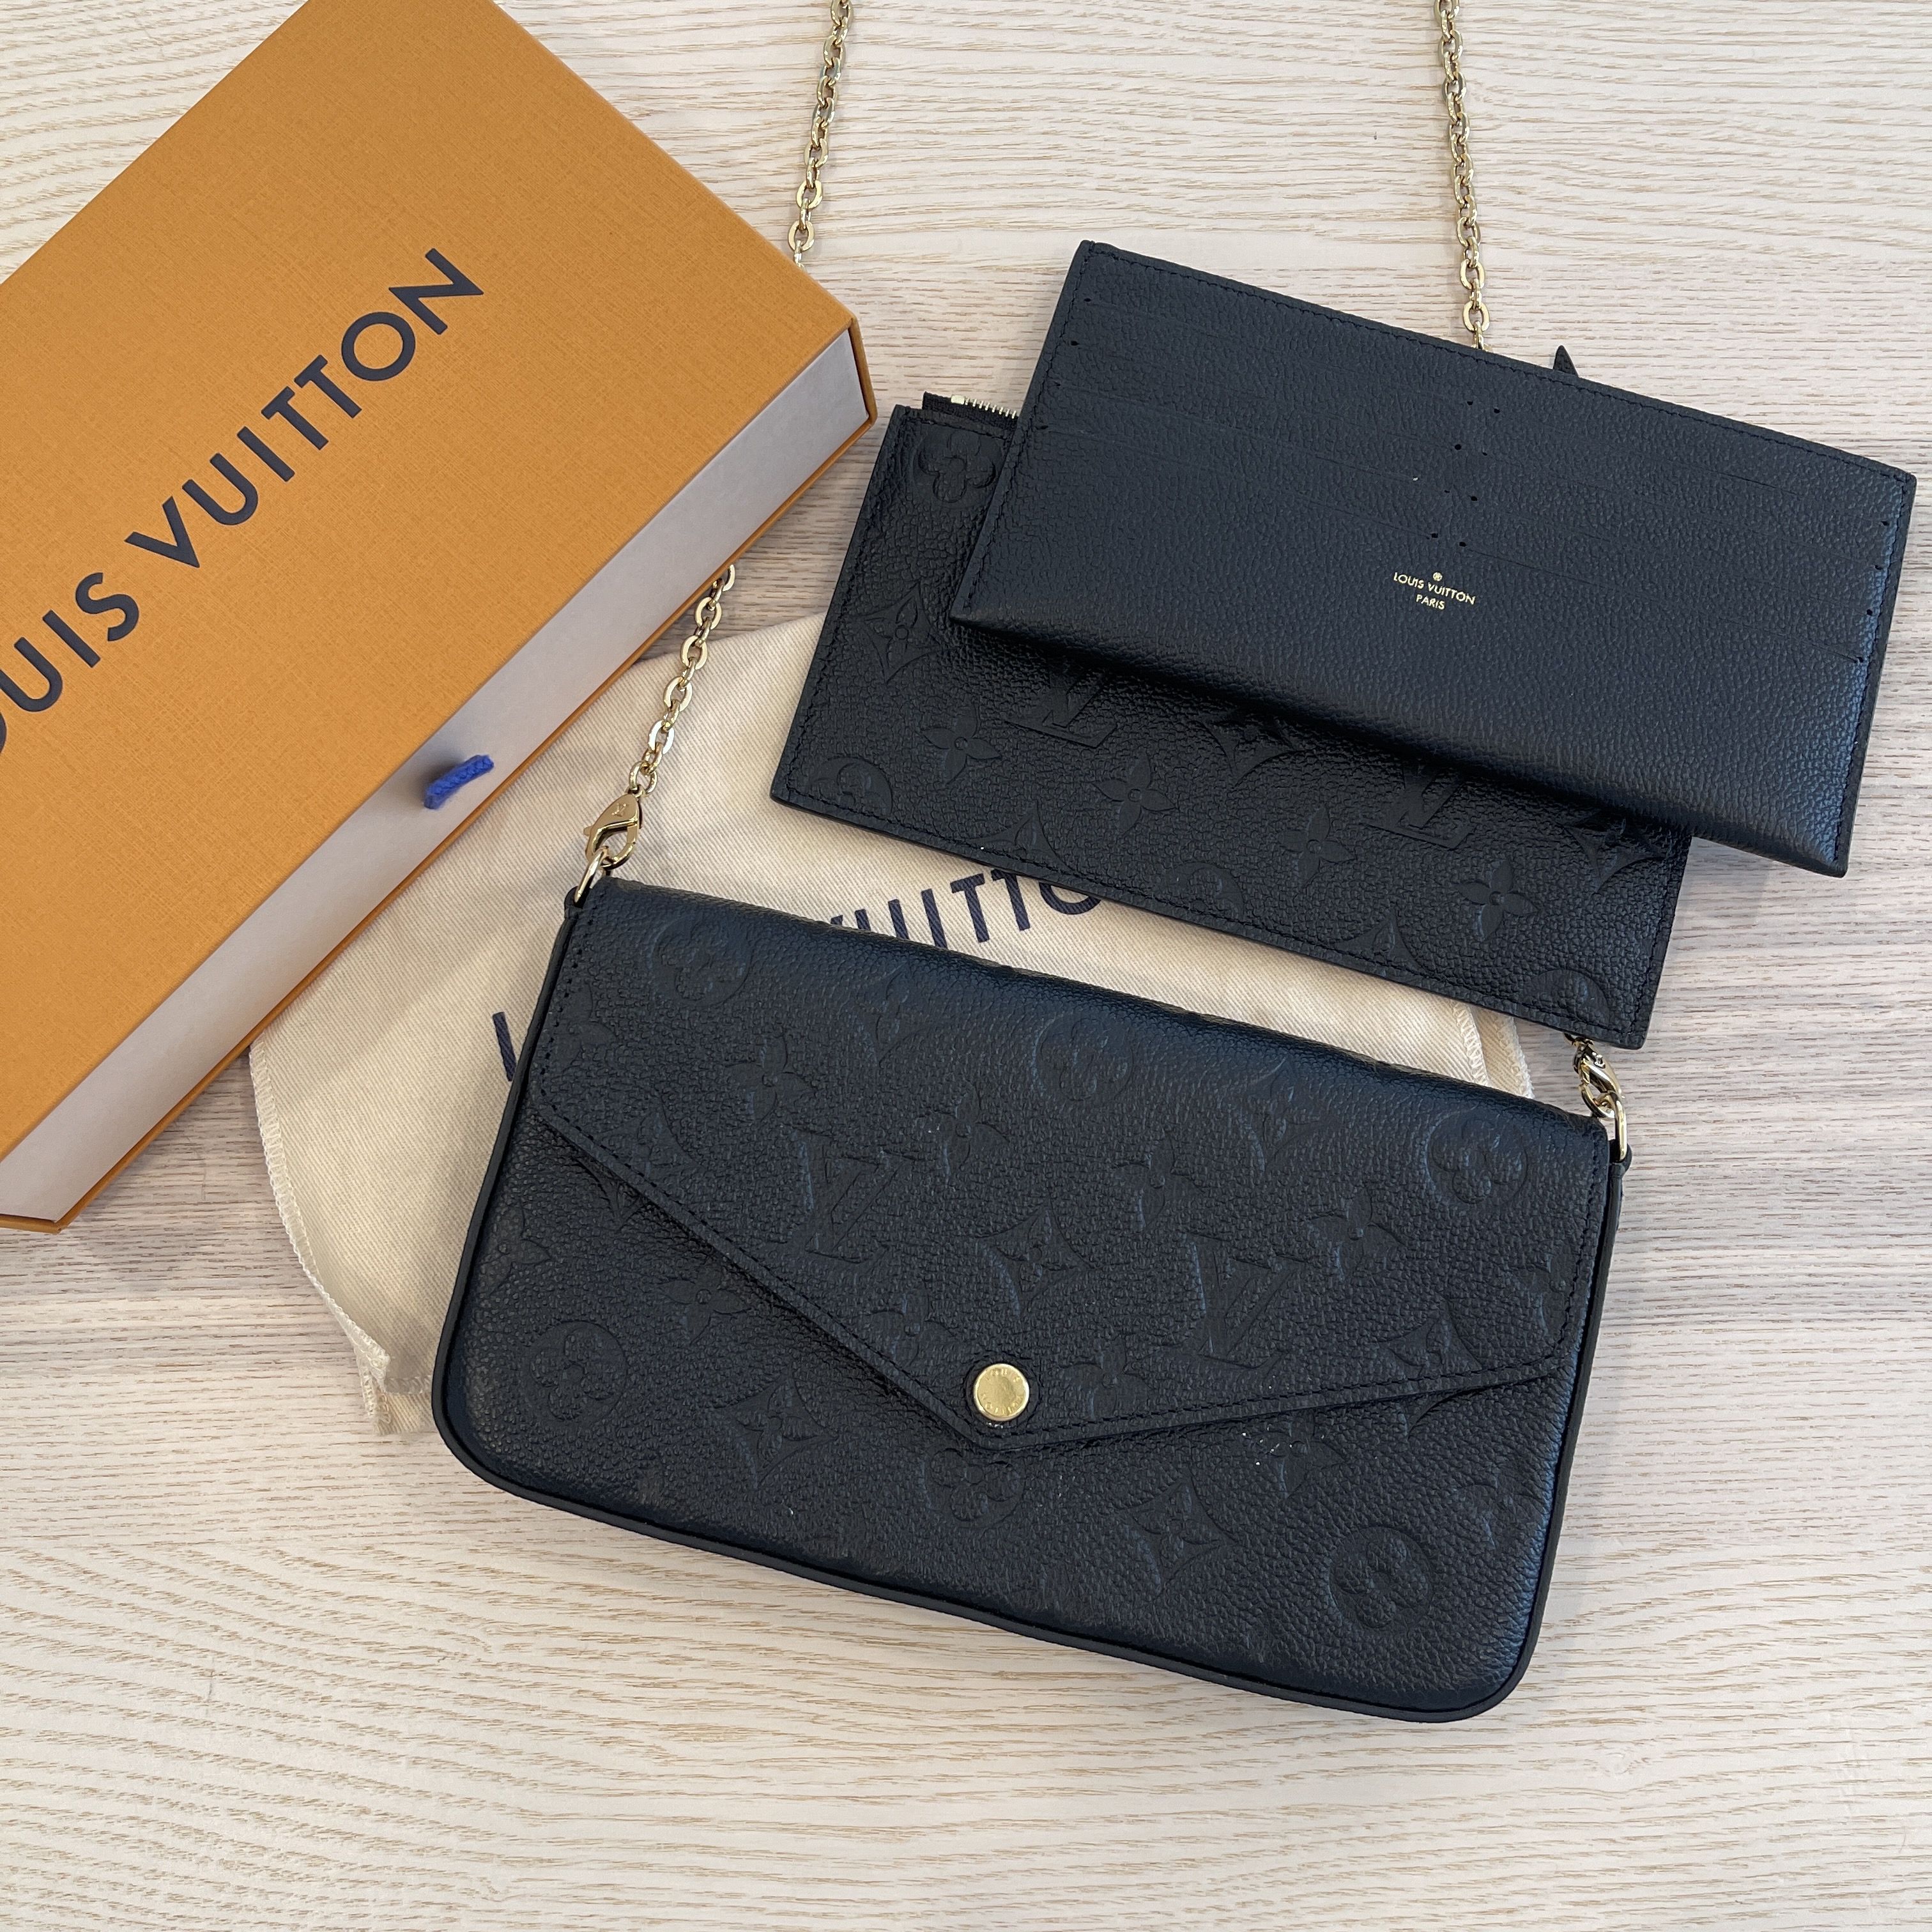 Louis Vuitton Pochette Felicie With Chain and Card Case Noir Black